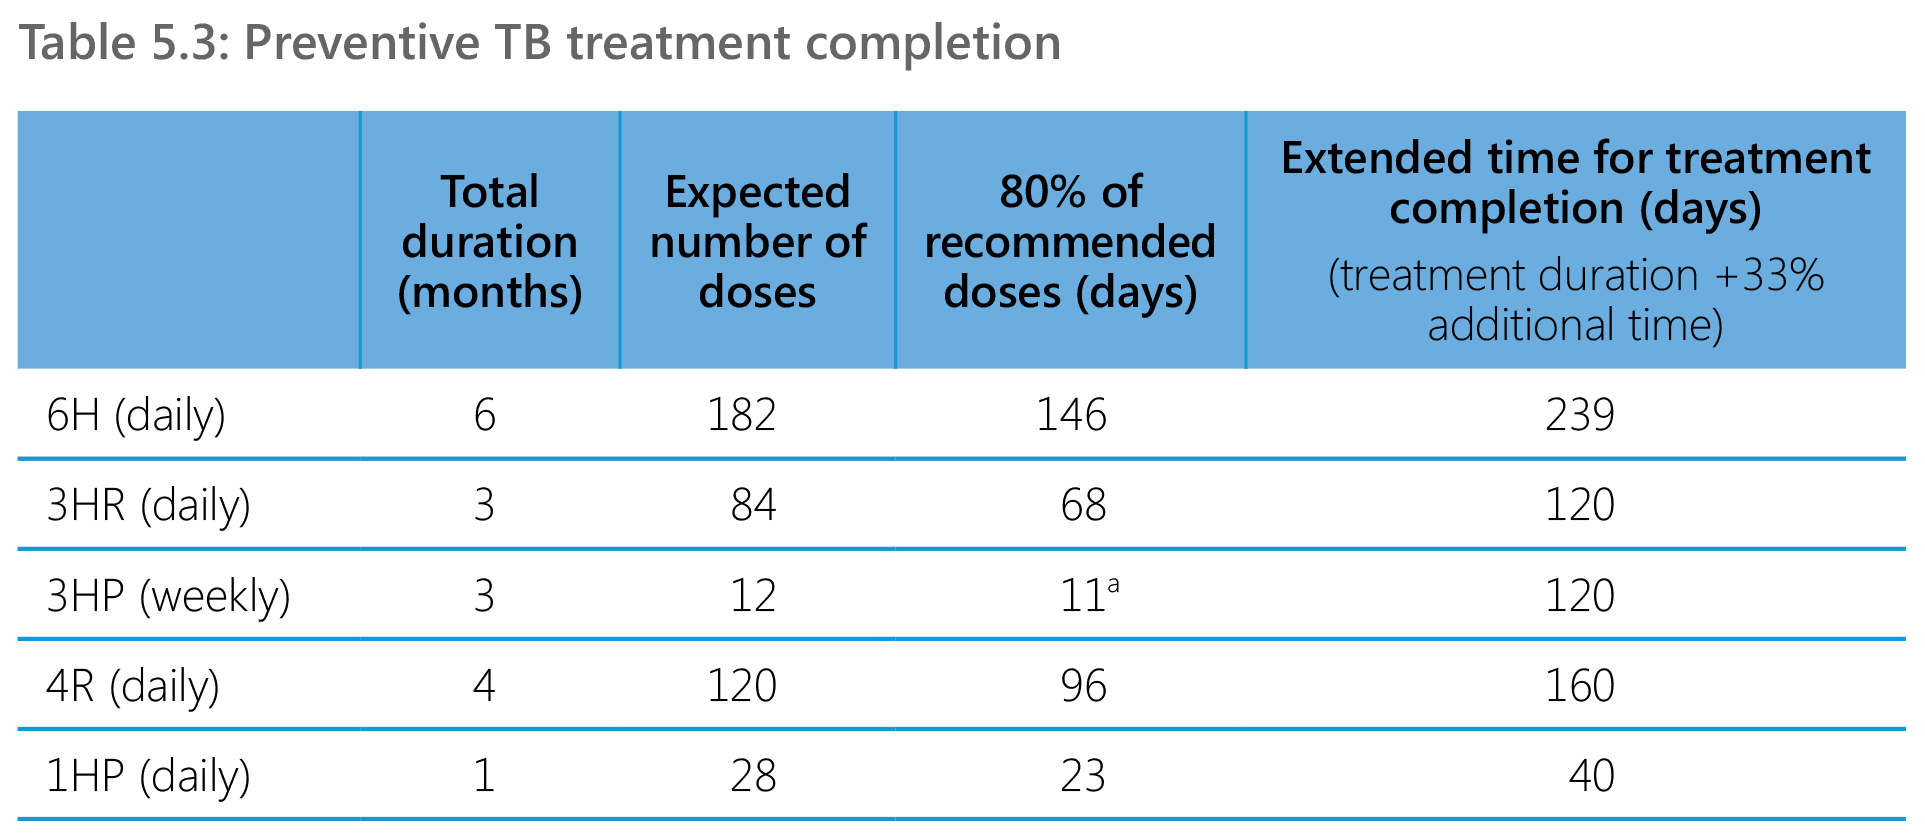 : Preventive TB treatment completion